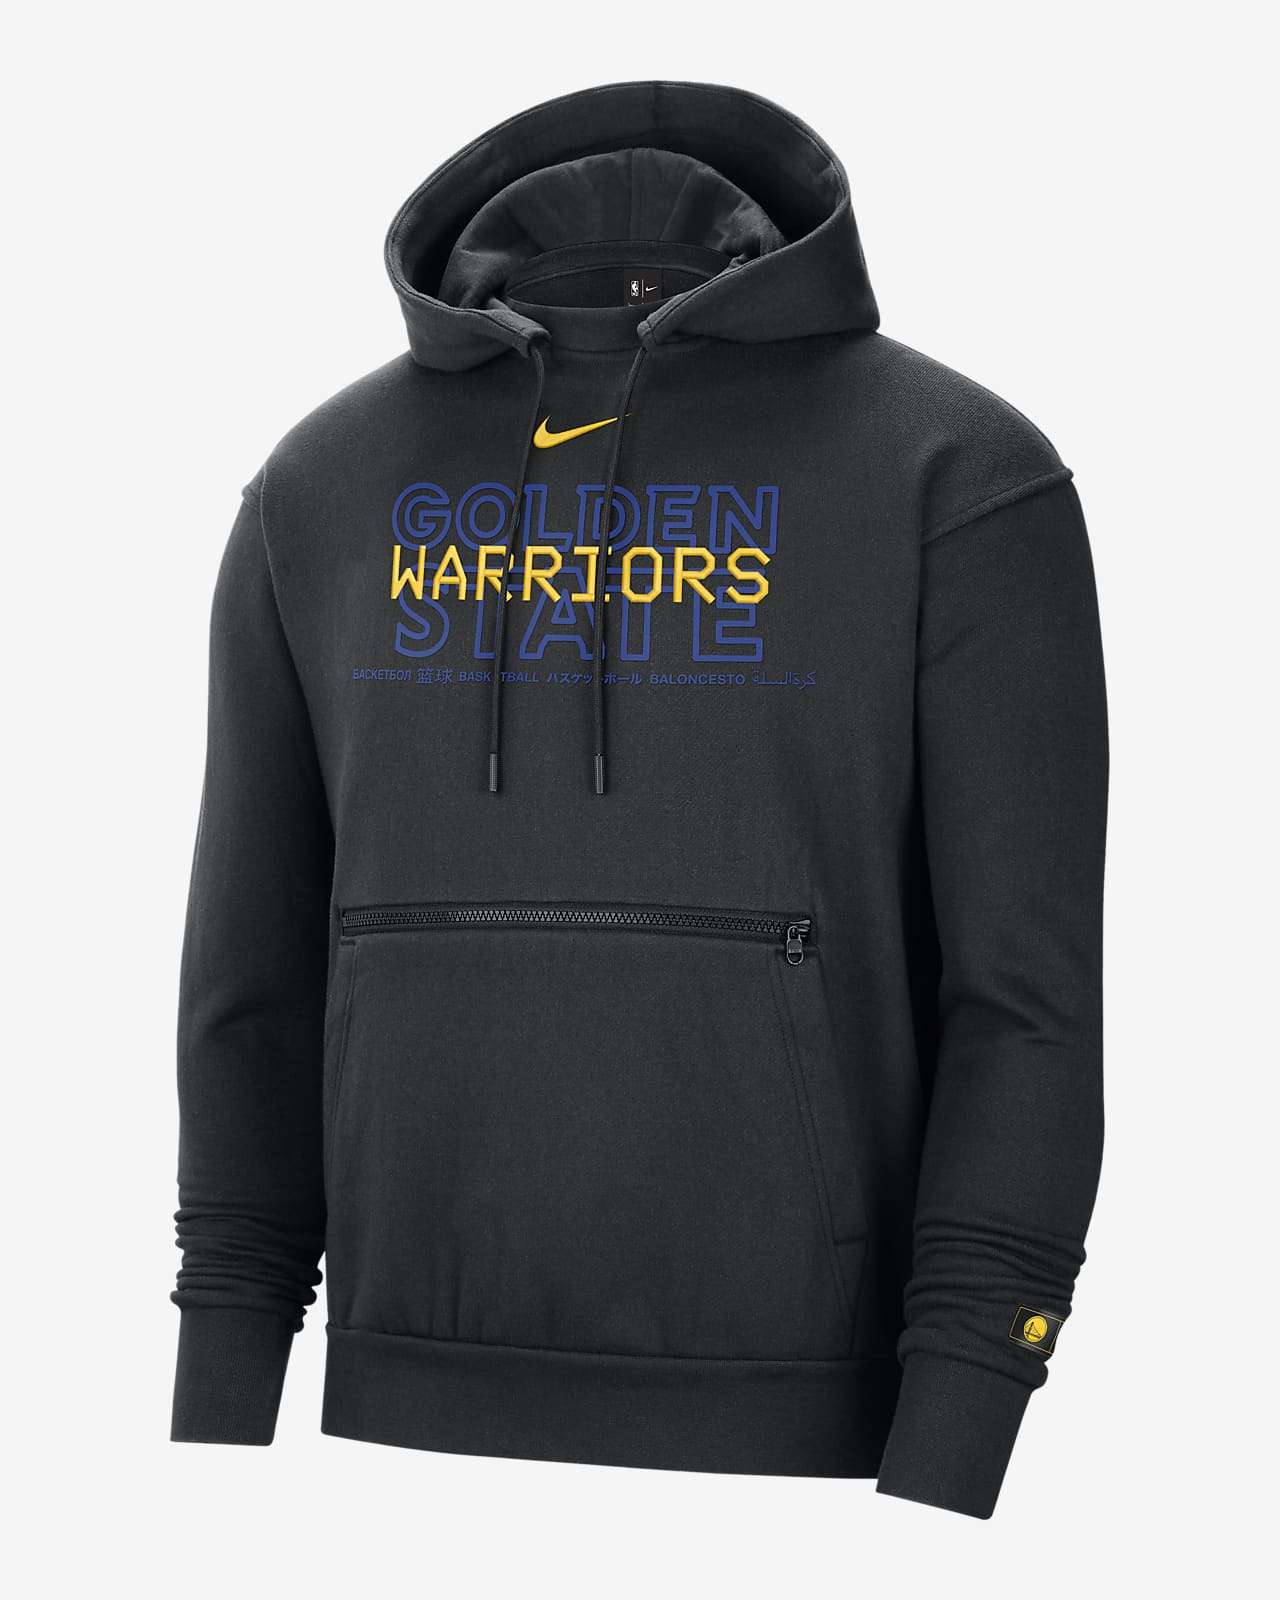 warriors nike apparel